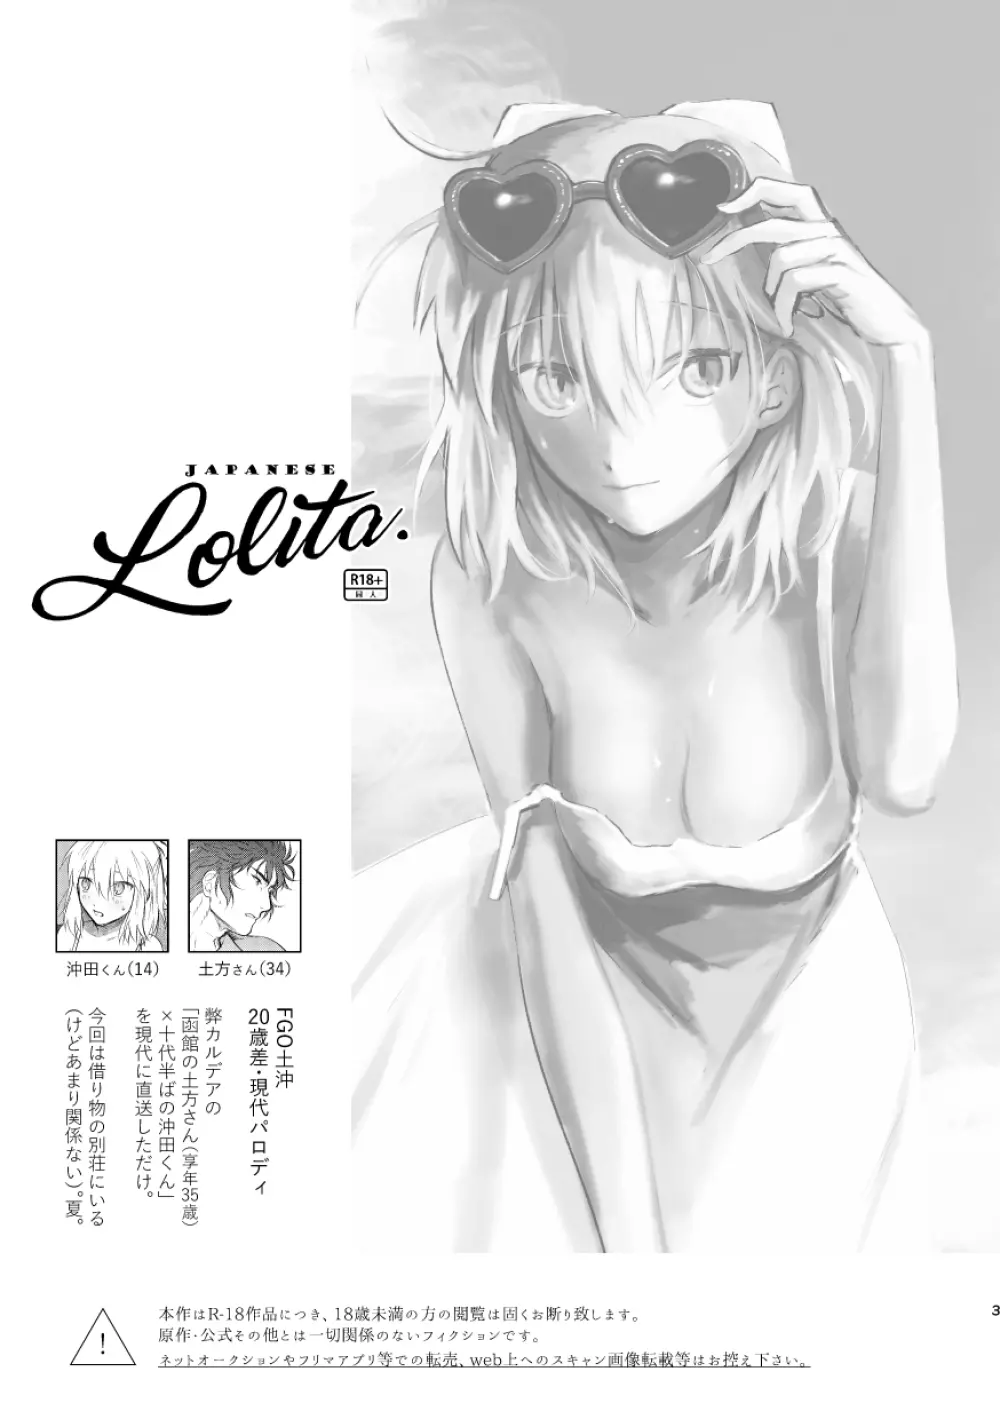 JAPANESE Lolita. - page2